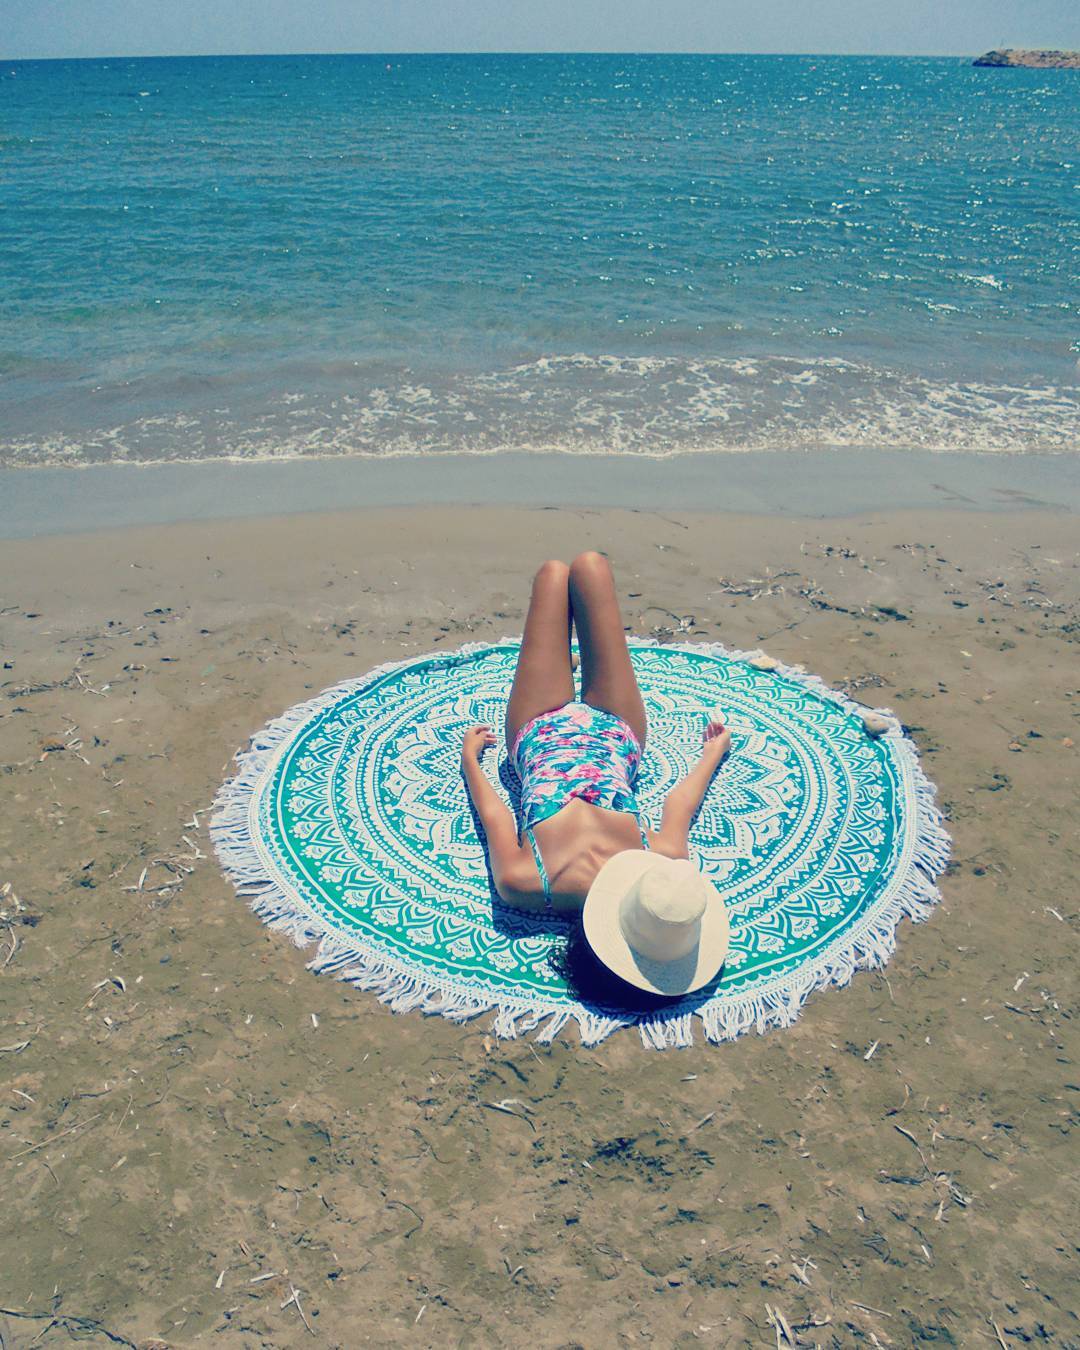 The obligatory #summer2017 mandala round beach throw instagram photo 🌴😄🐚🐬🌴